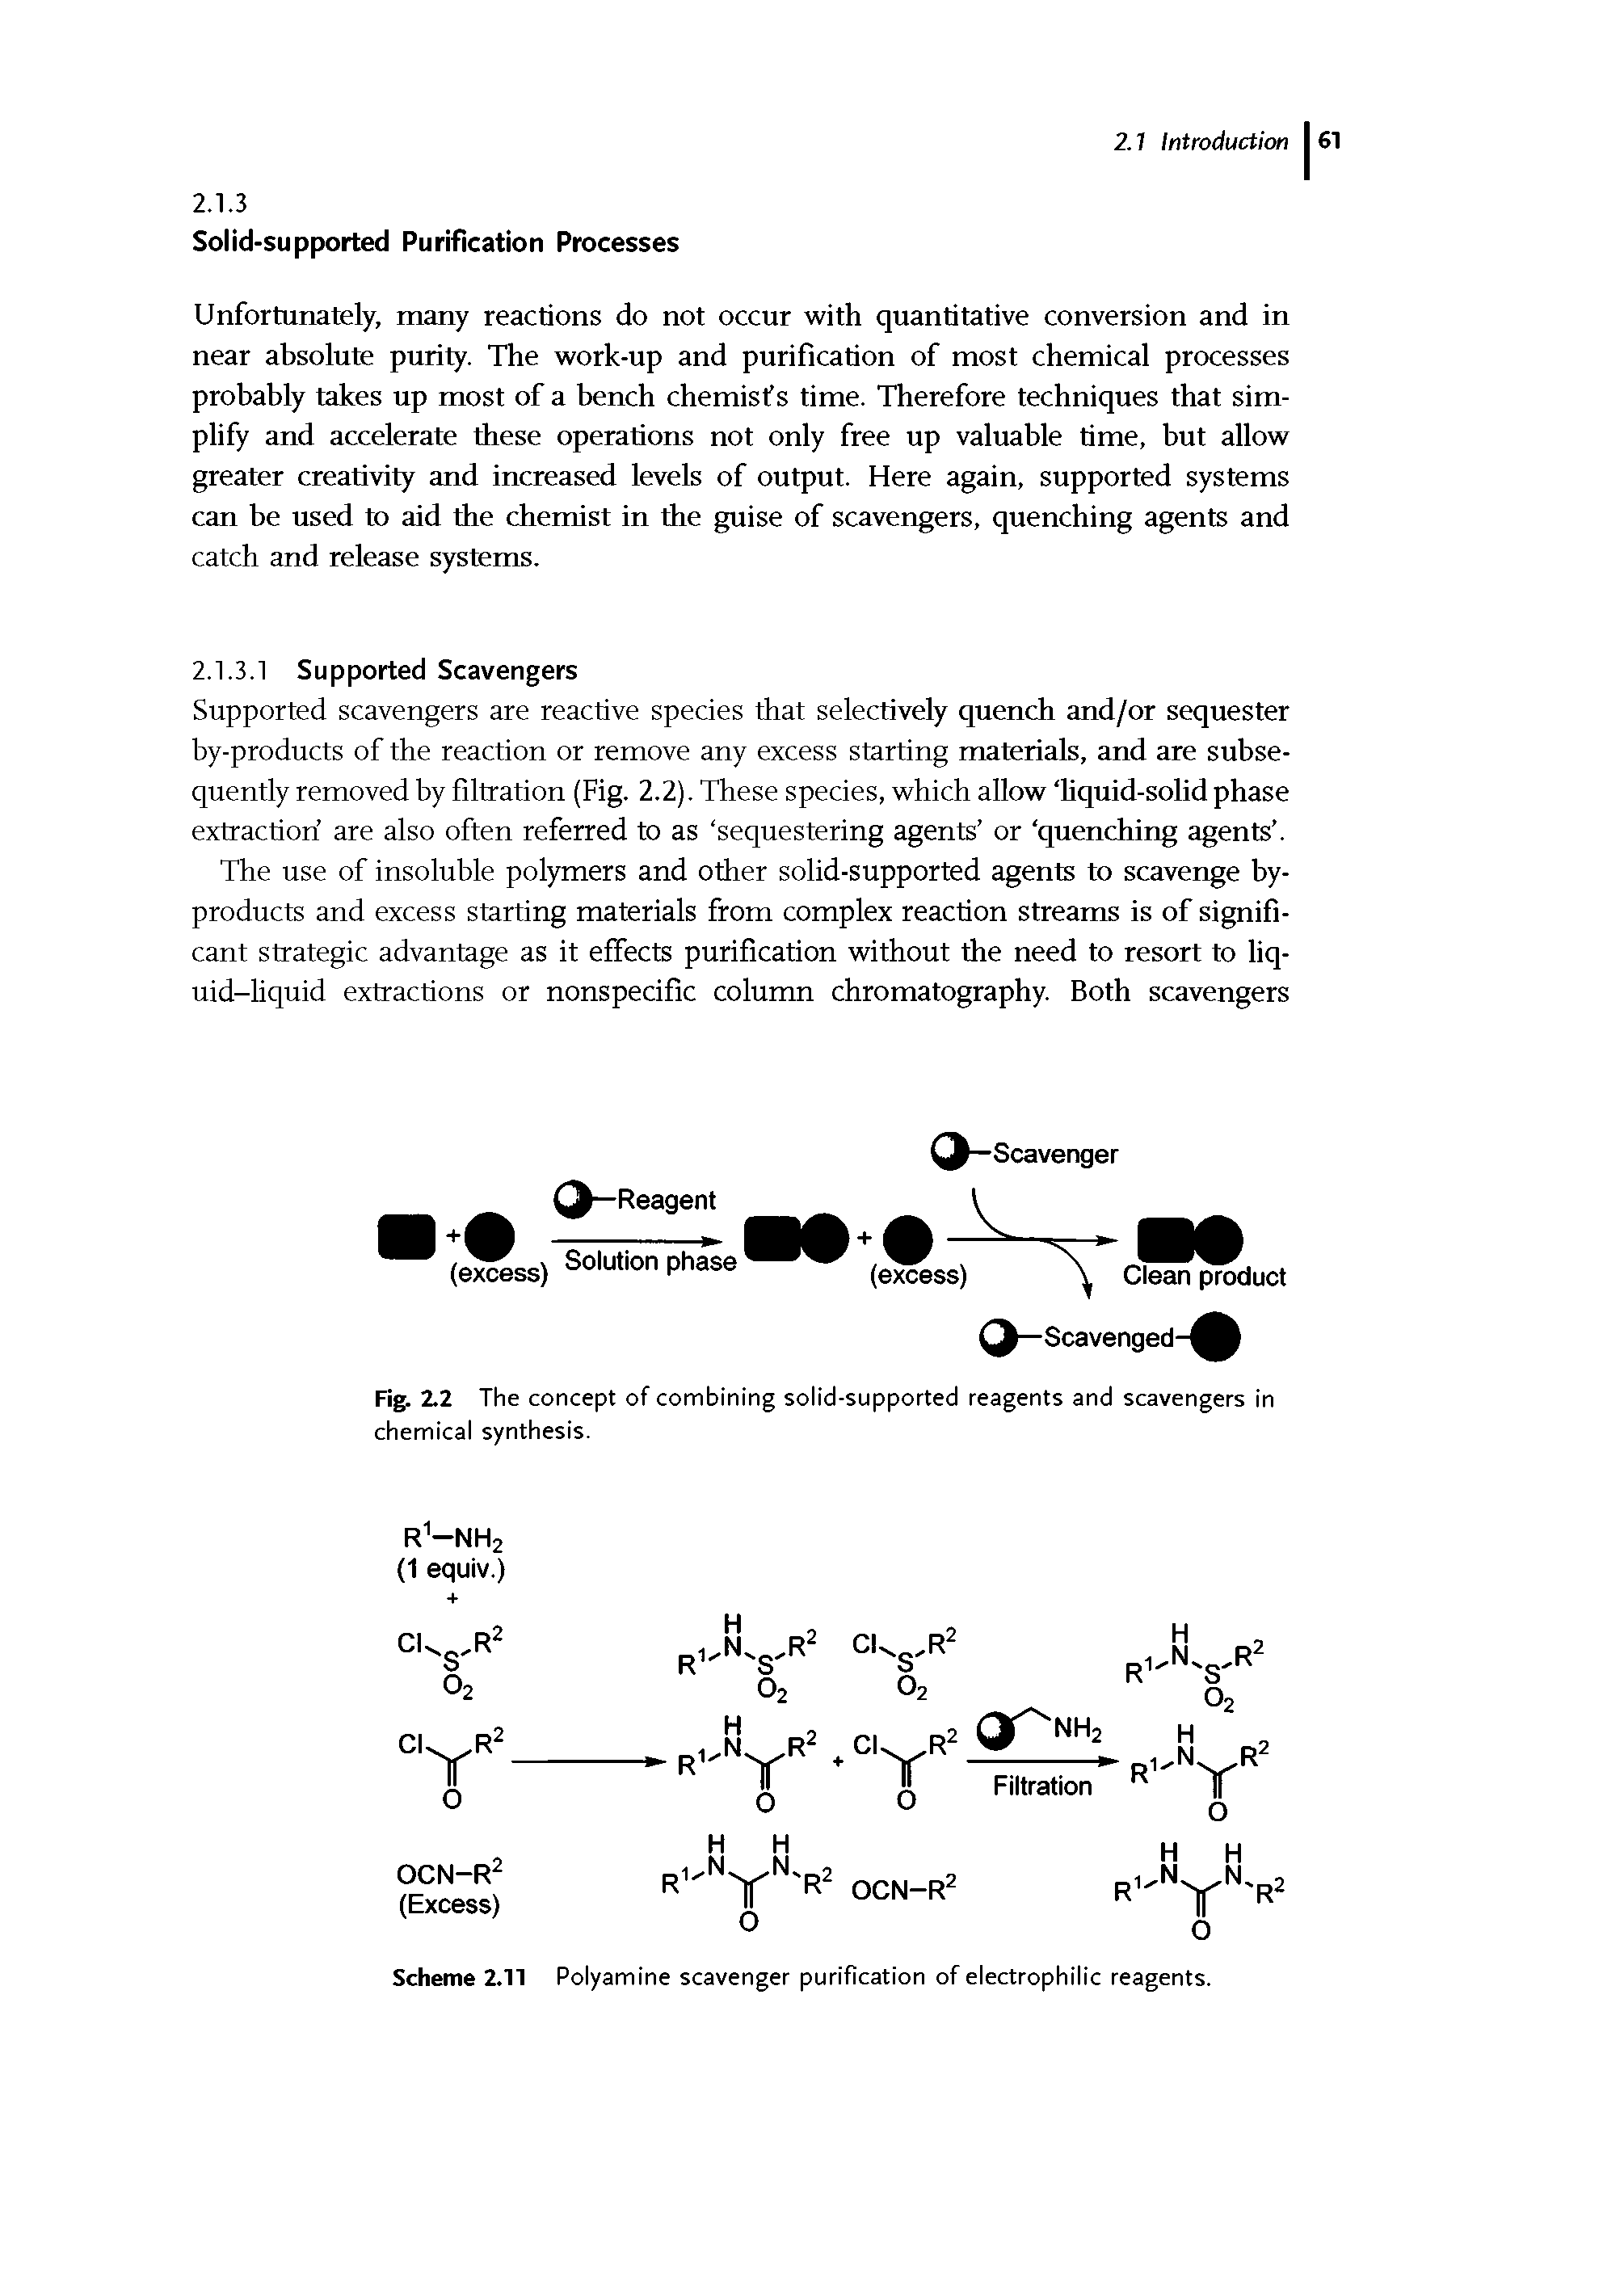 Scheme 2.11 Polyamine scavenger purification of electrophilic reagents.